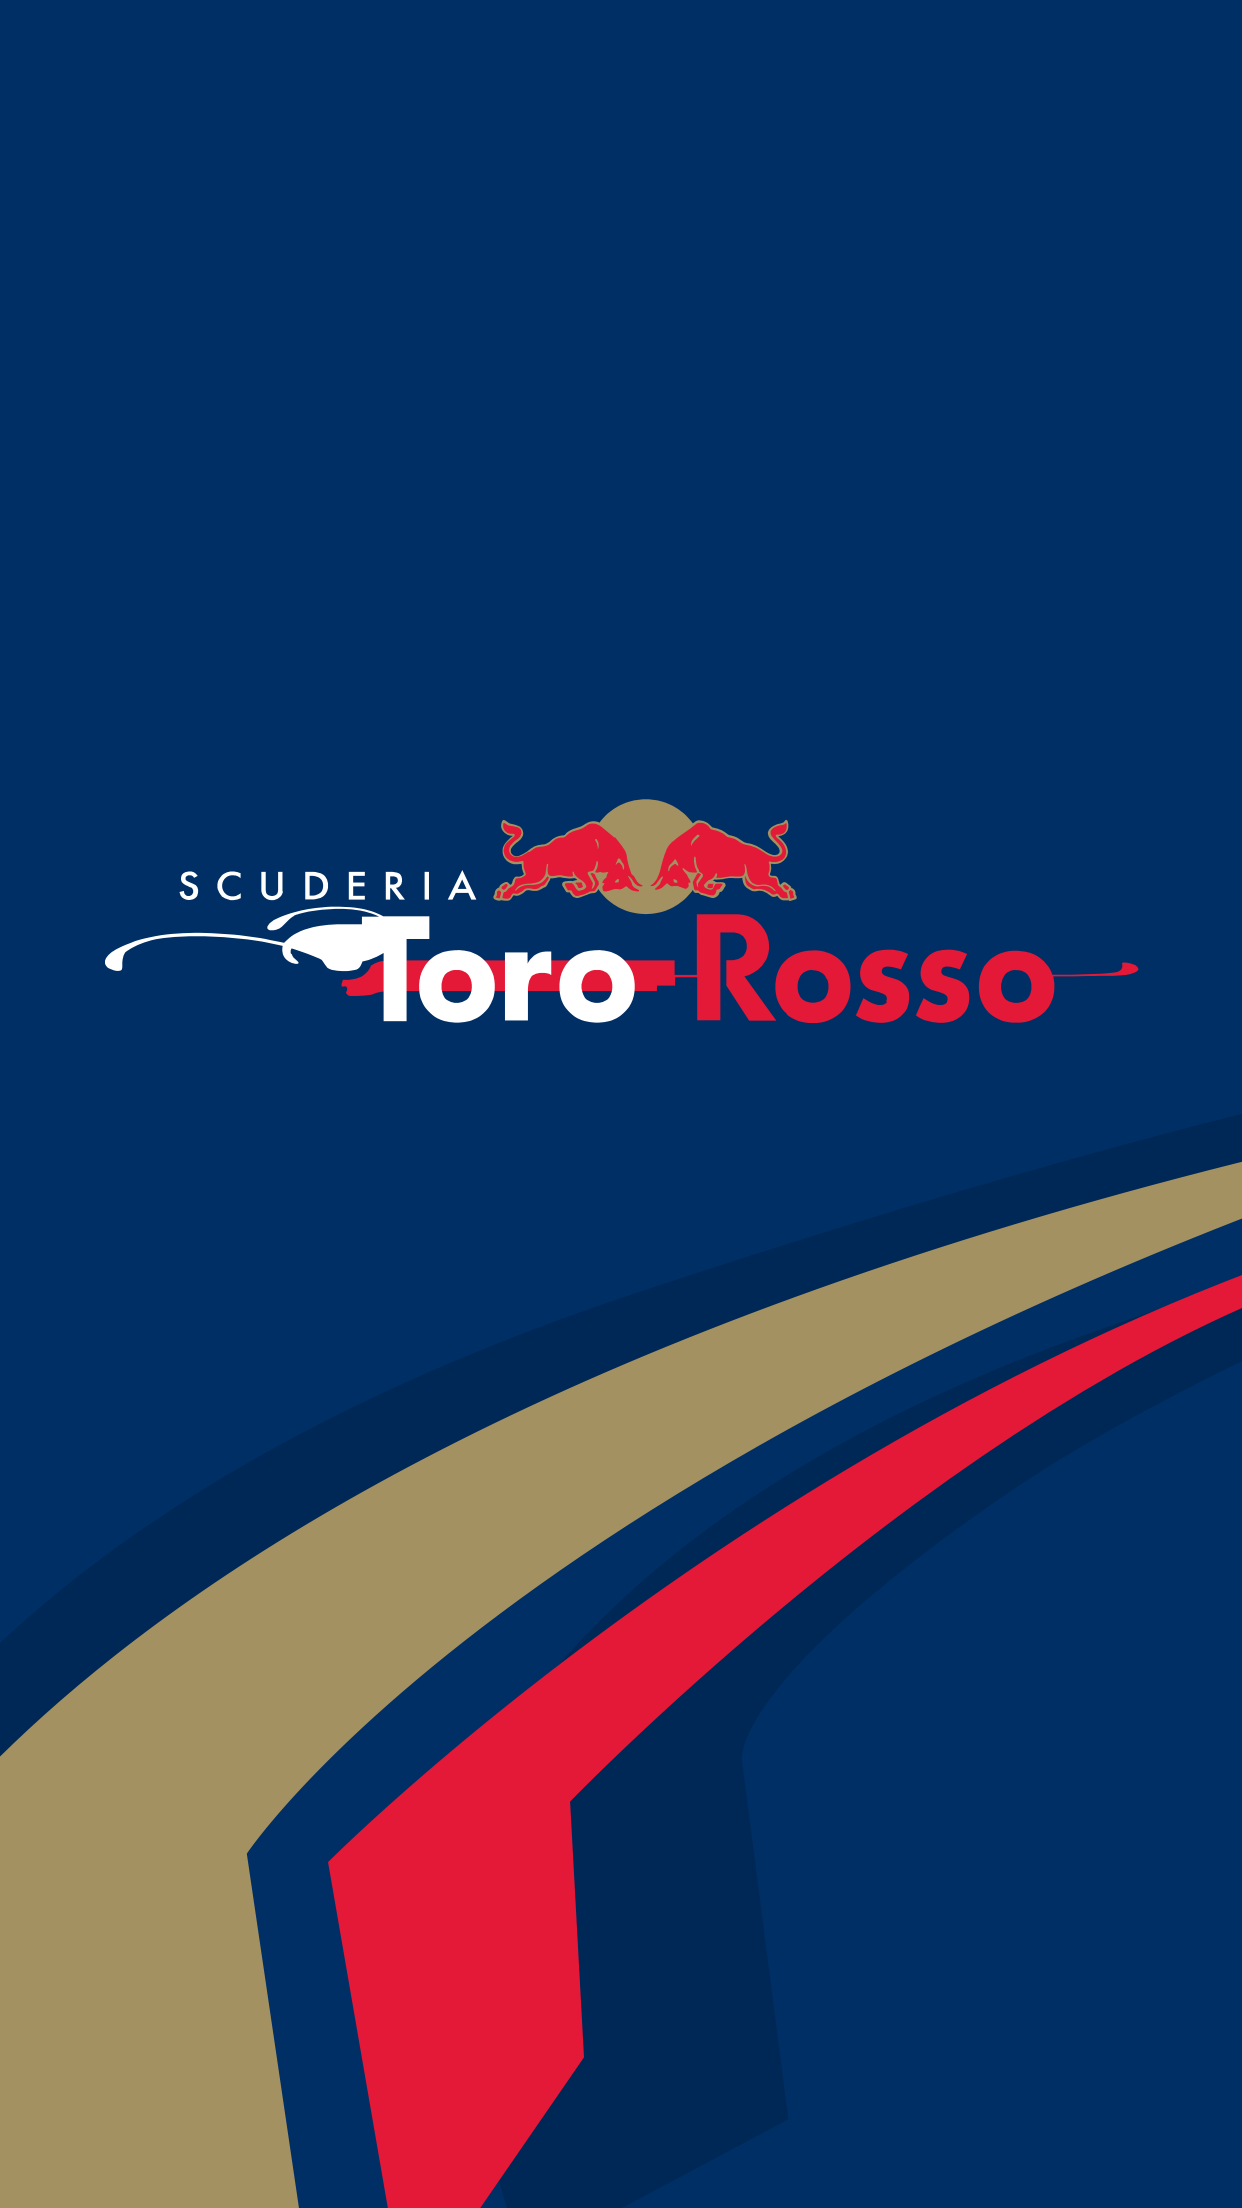 Torro Rosso - Toro Rosso Wallpaper Iphone , HD Wallpaper & Backgrounds